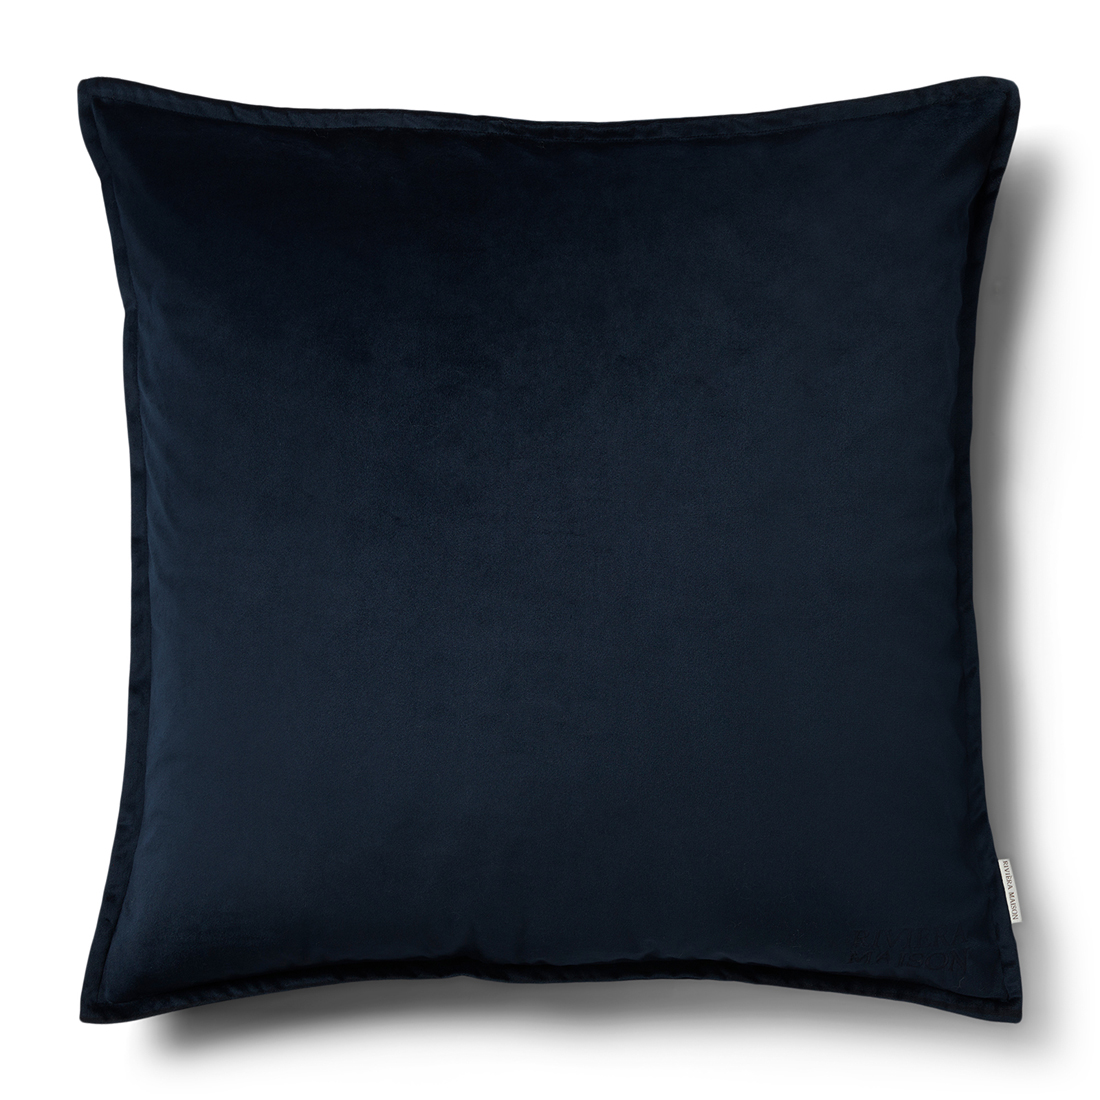 Riviera Maison Kussensloop 60x60 Zwart - RM Velvet Pillow Cover - Blauw